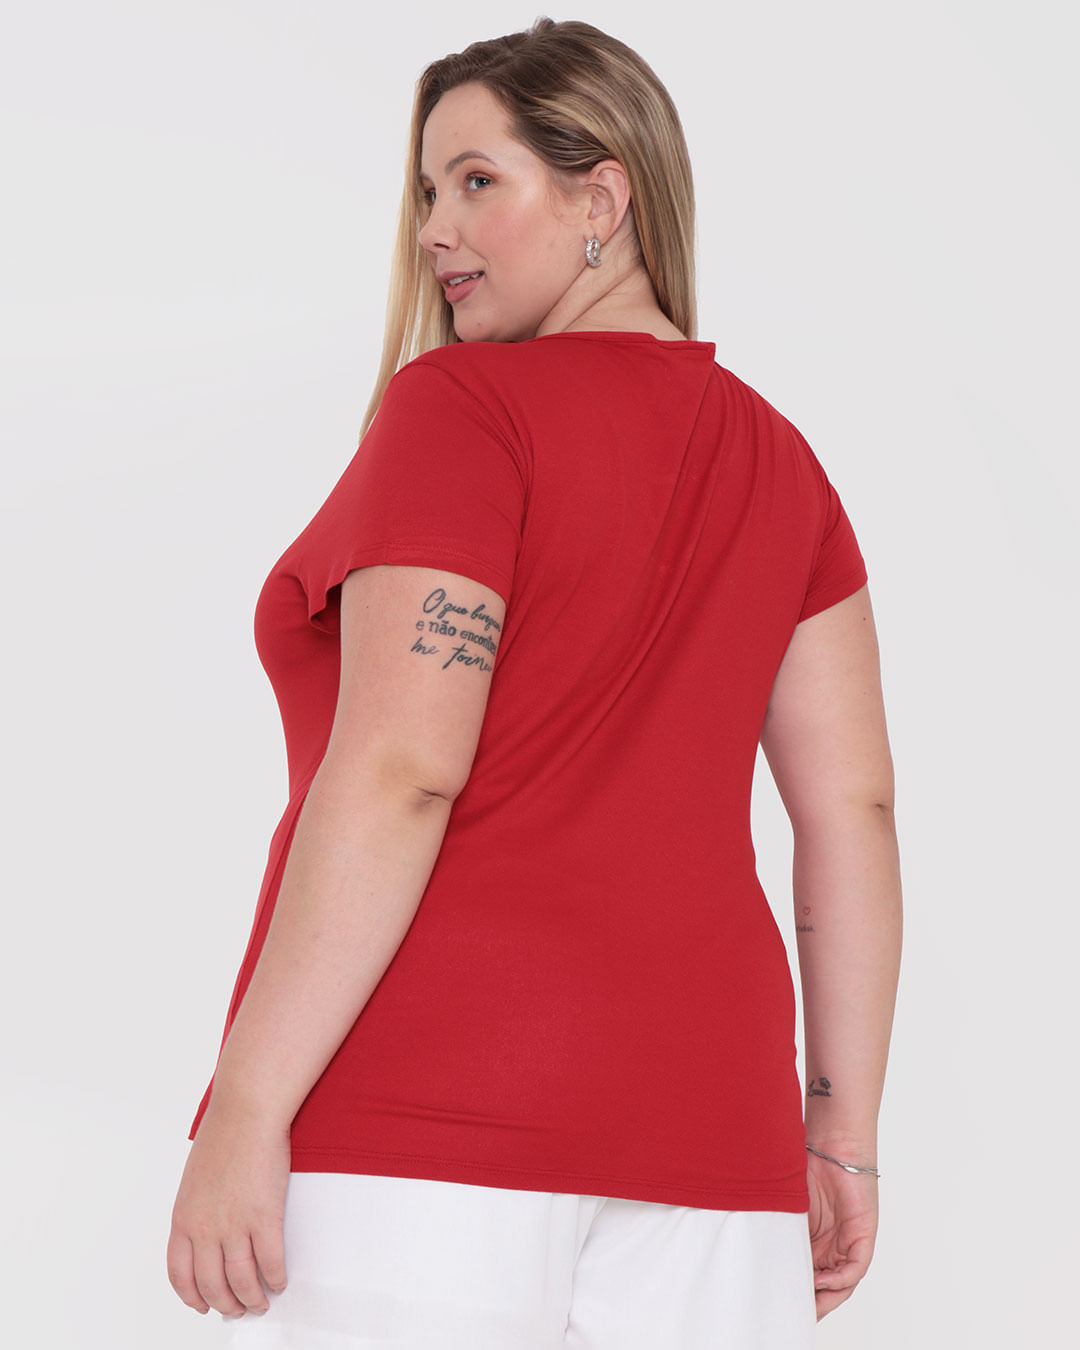 Blusa Plus Size Feminina Miçanga Vermelha